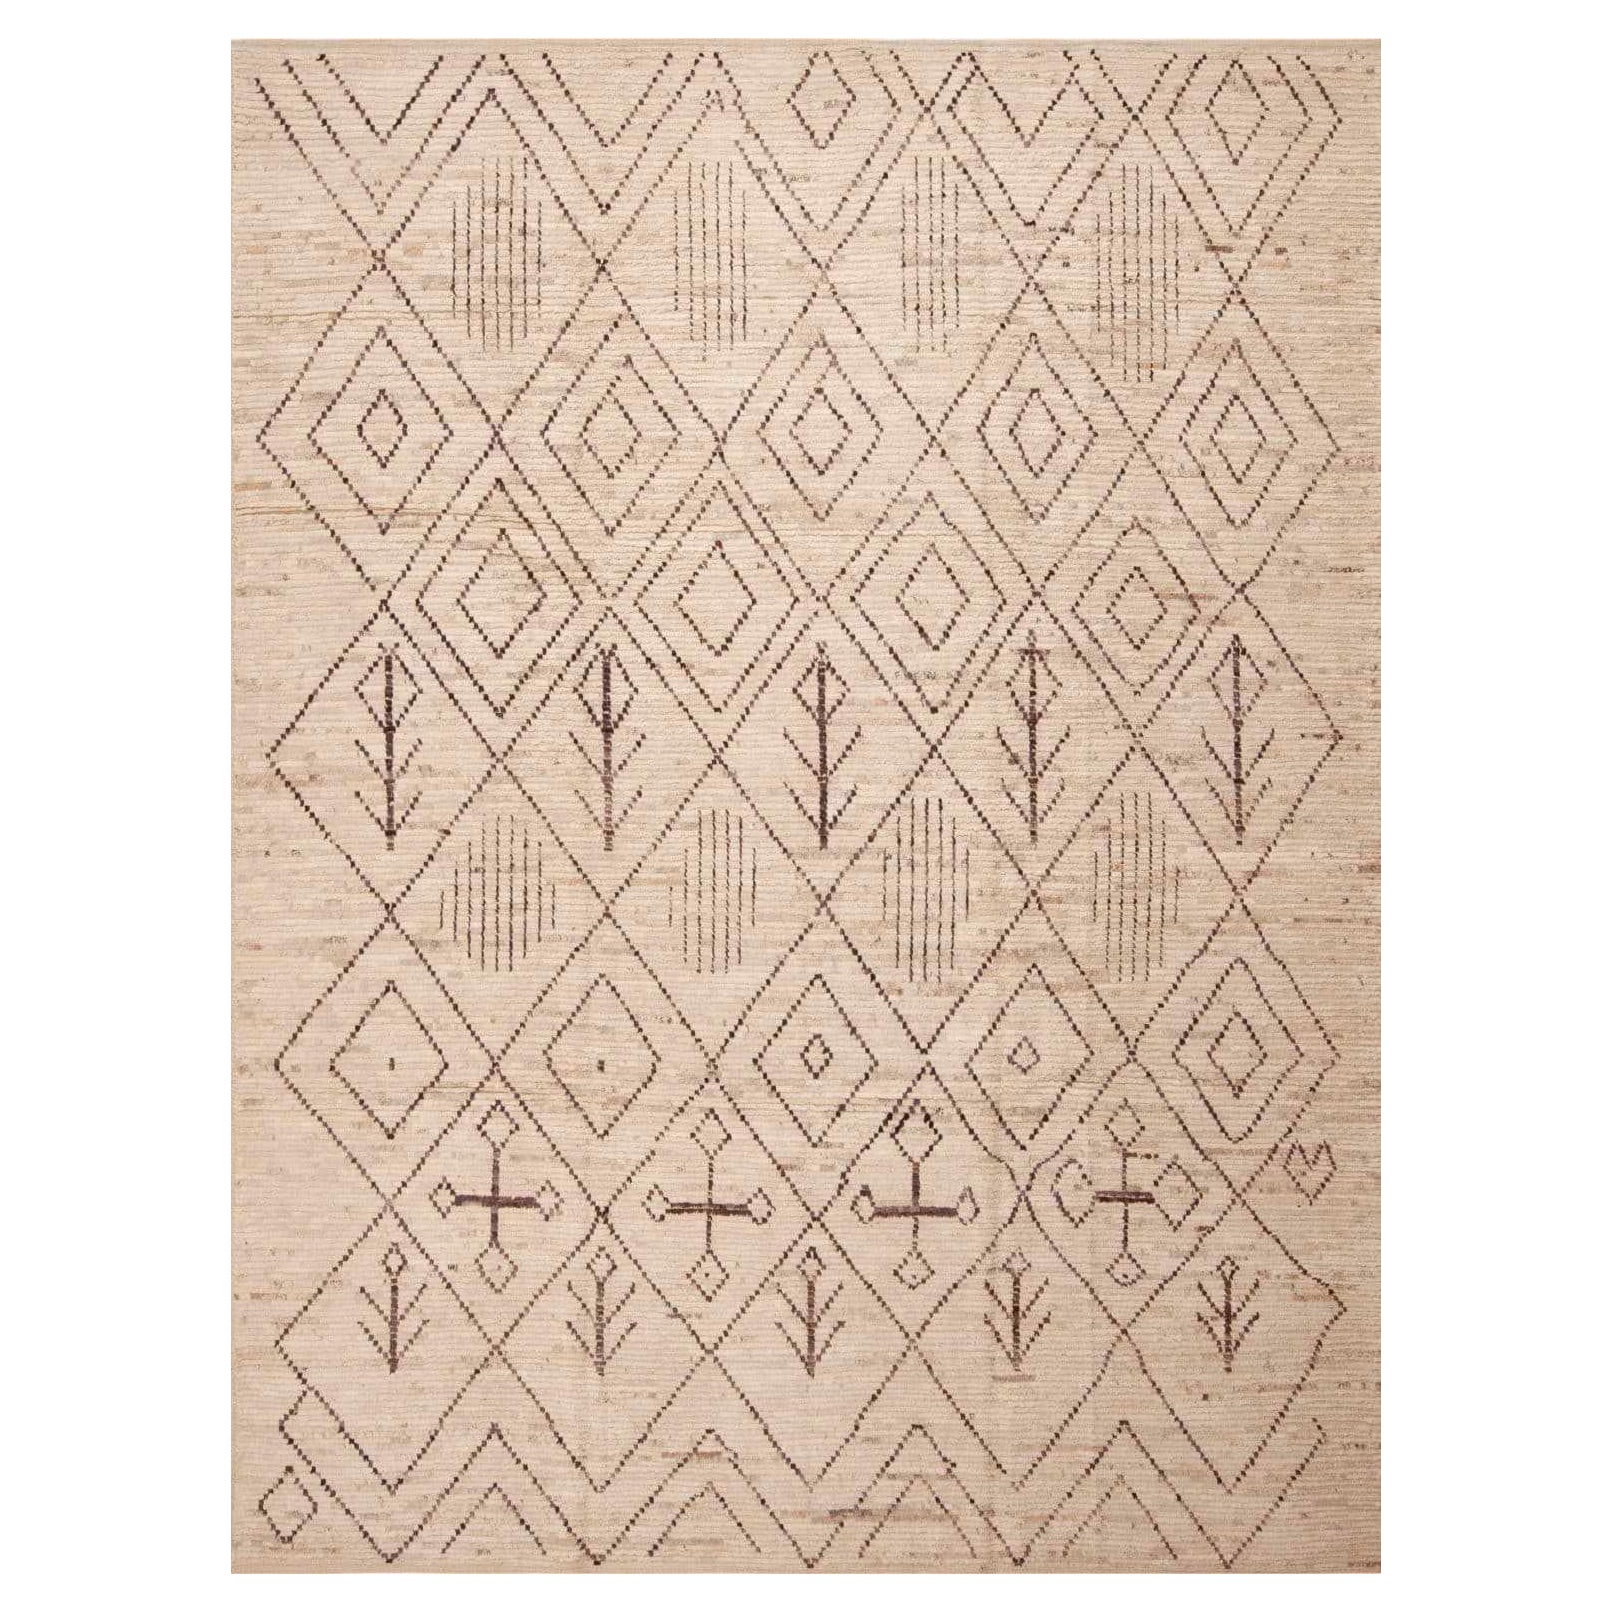 Tapis Beni Ourain marocain tribal moderne de la collection Nazmiyal 9'3" x 12'